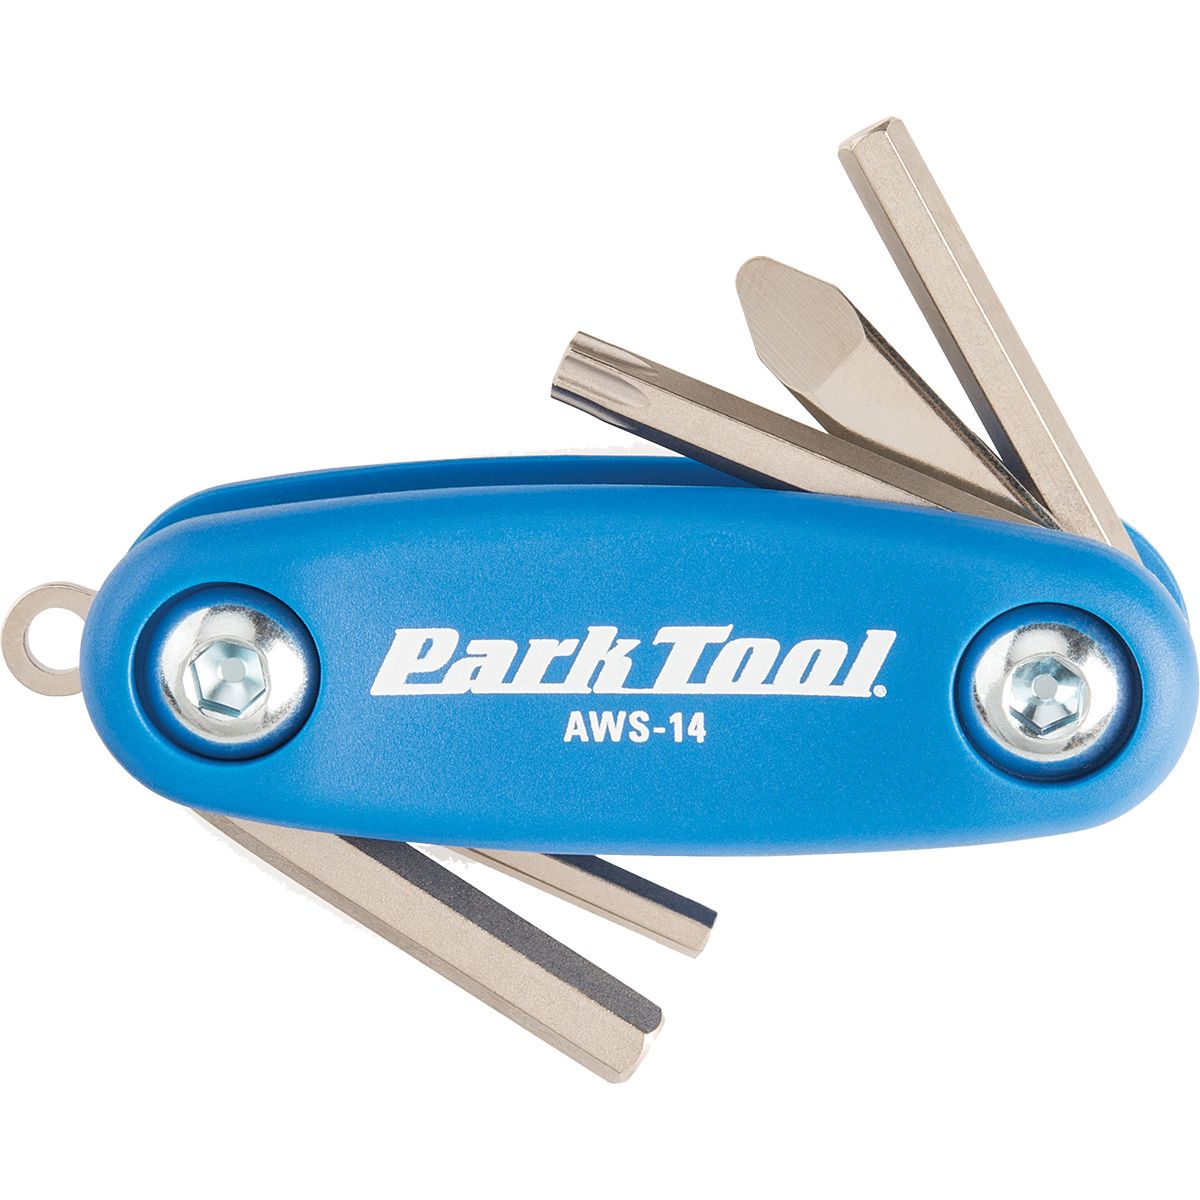 Park Tool Mini Folding Hex/Screwdriver Set